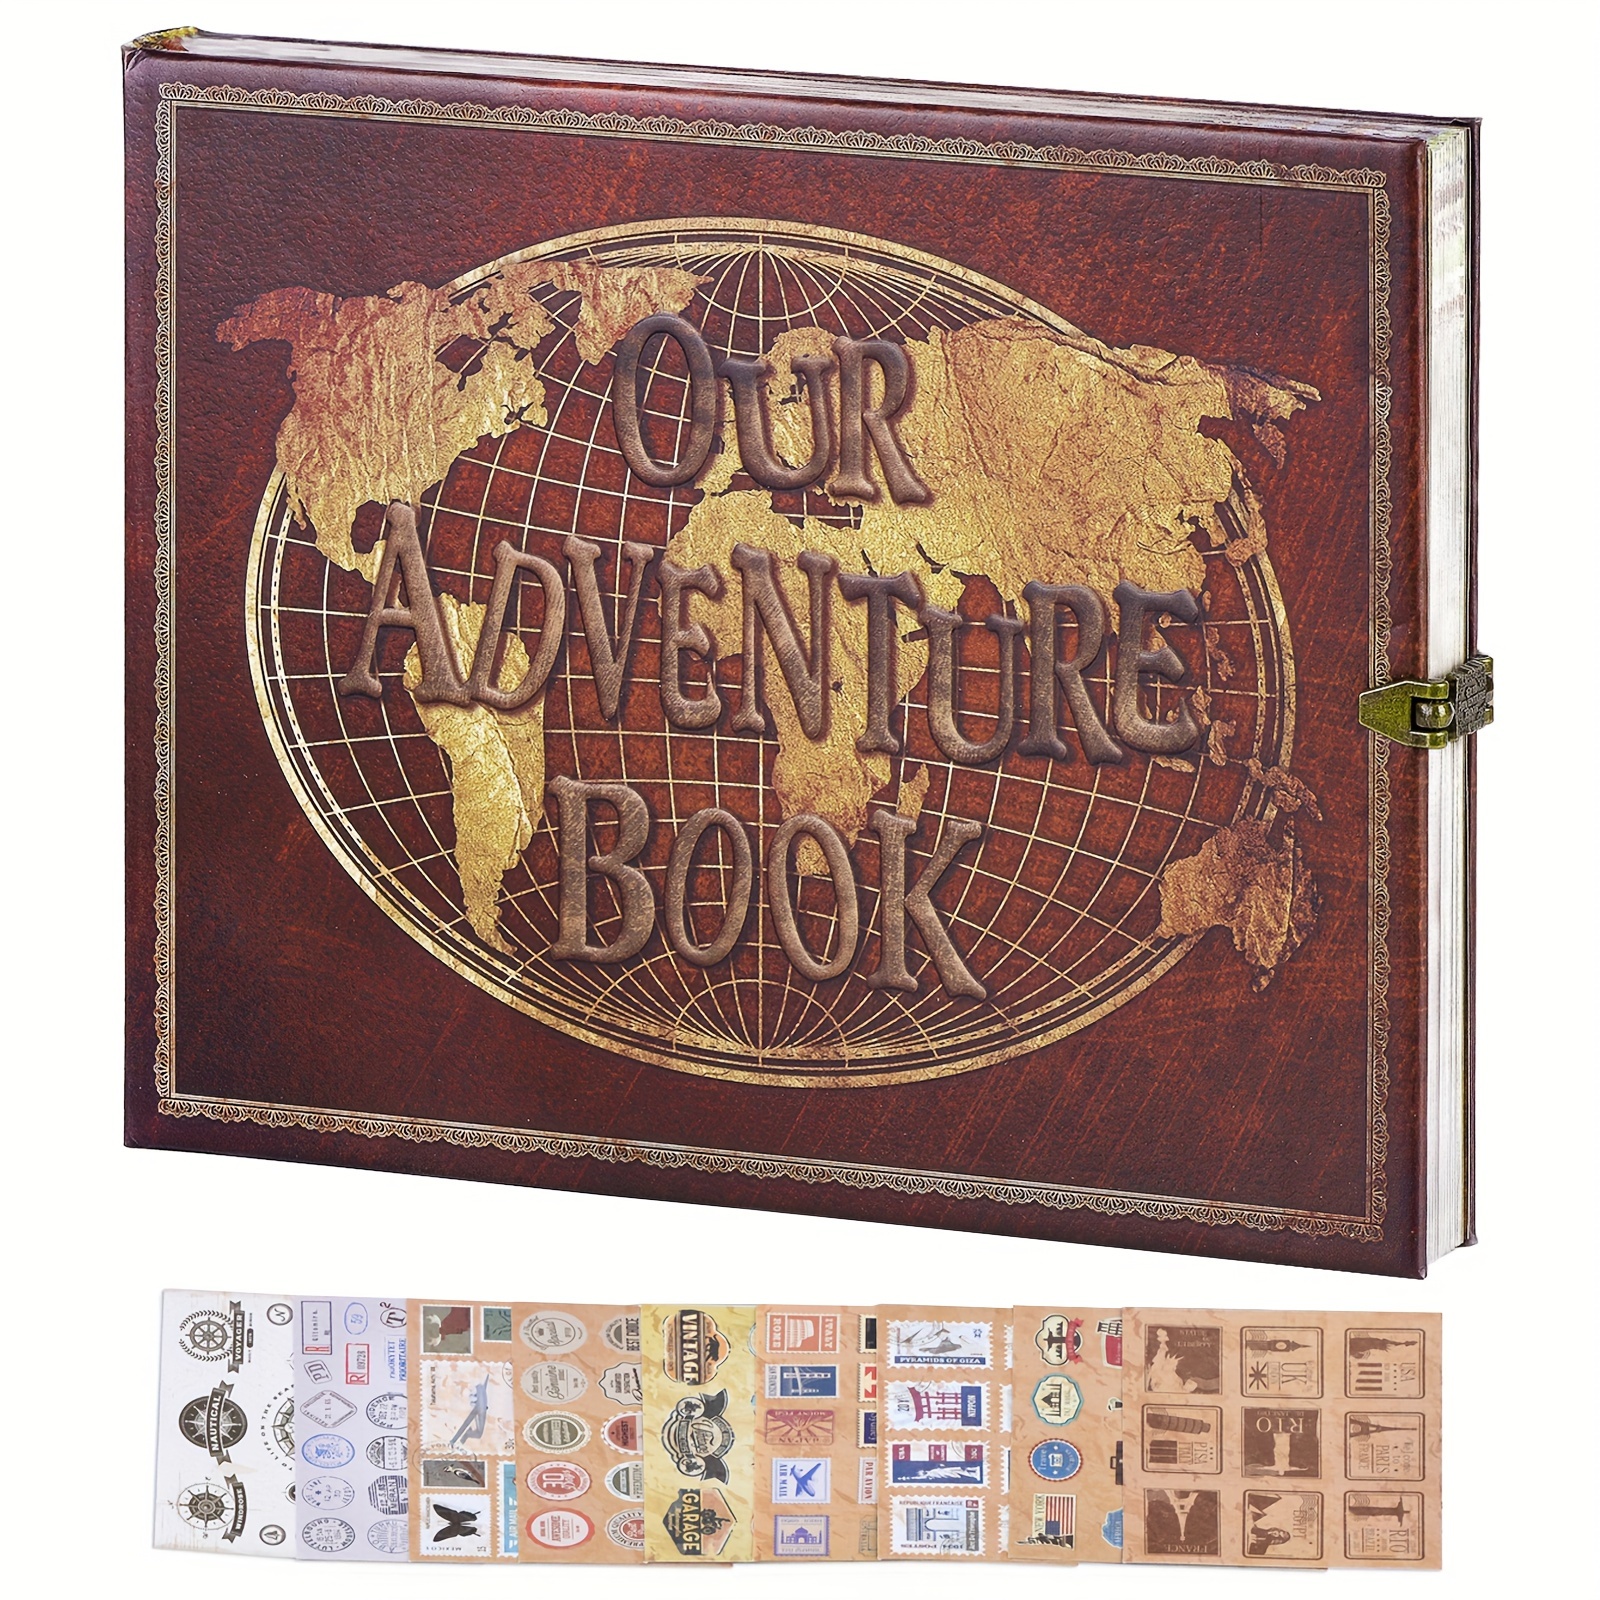 LankyBox's Thicc Adventure Book – LankyBox Shop